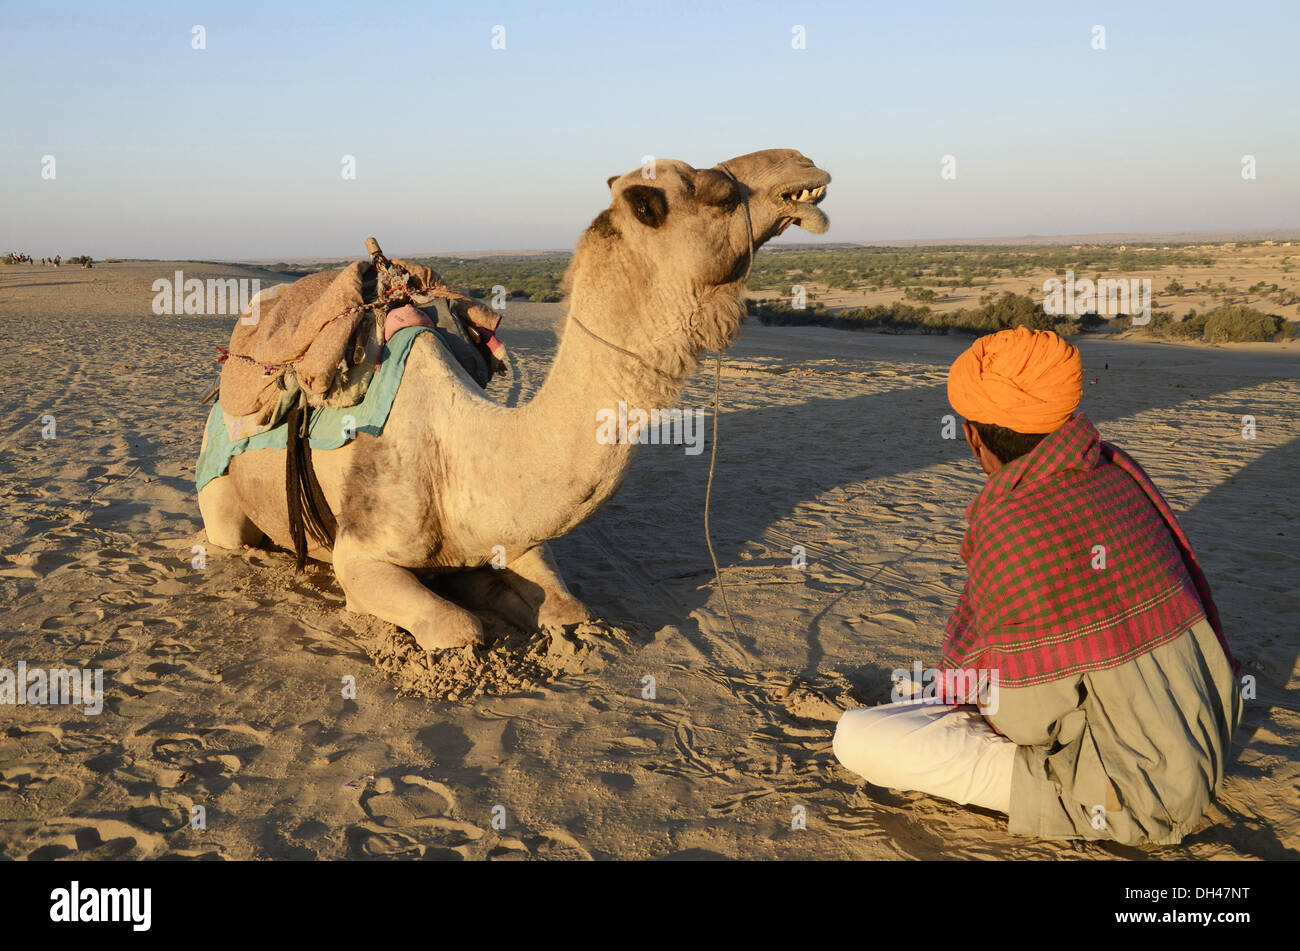 man with camel sitting on desert Sand Khuhri Jaisalmer Rajasthan India Stock Photo